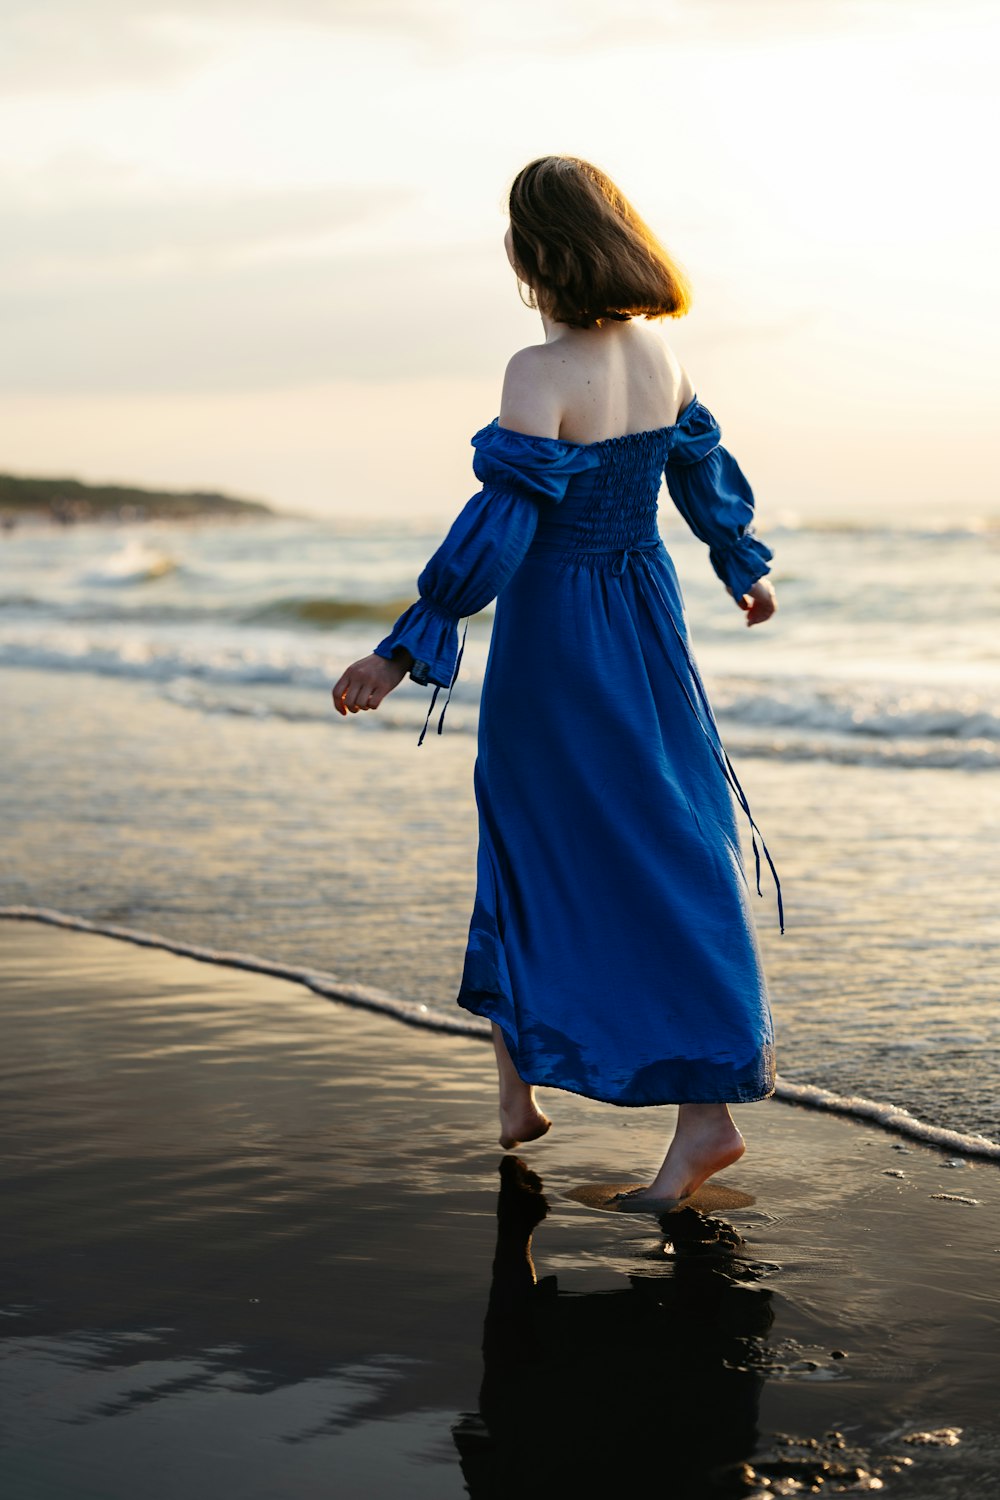 a woman in a blue dress walking on the beach